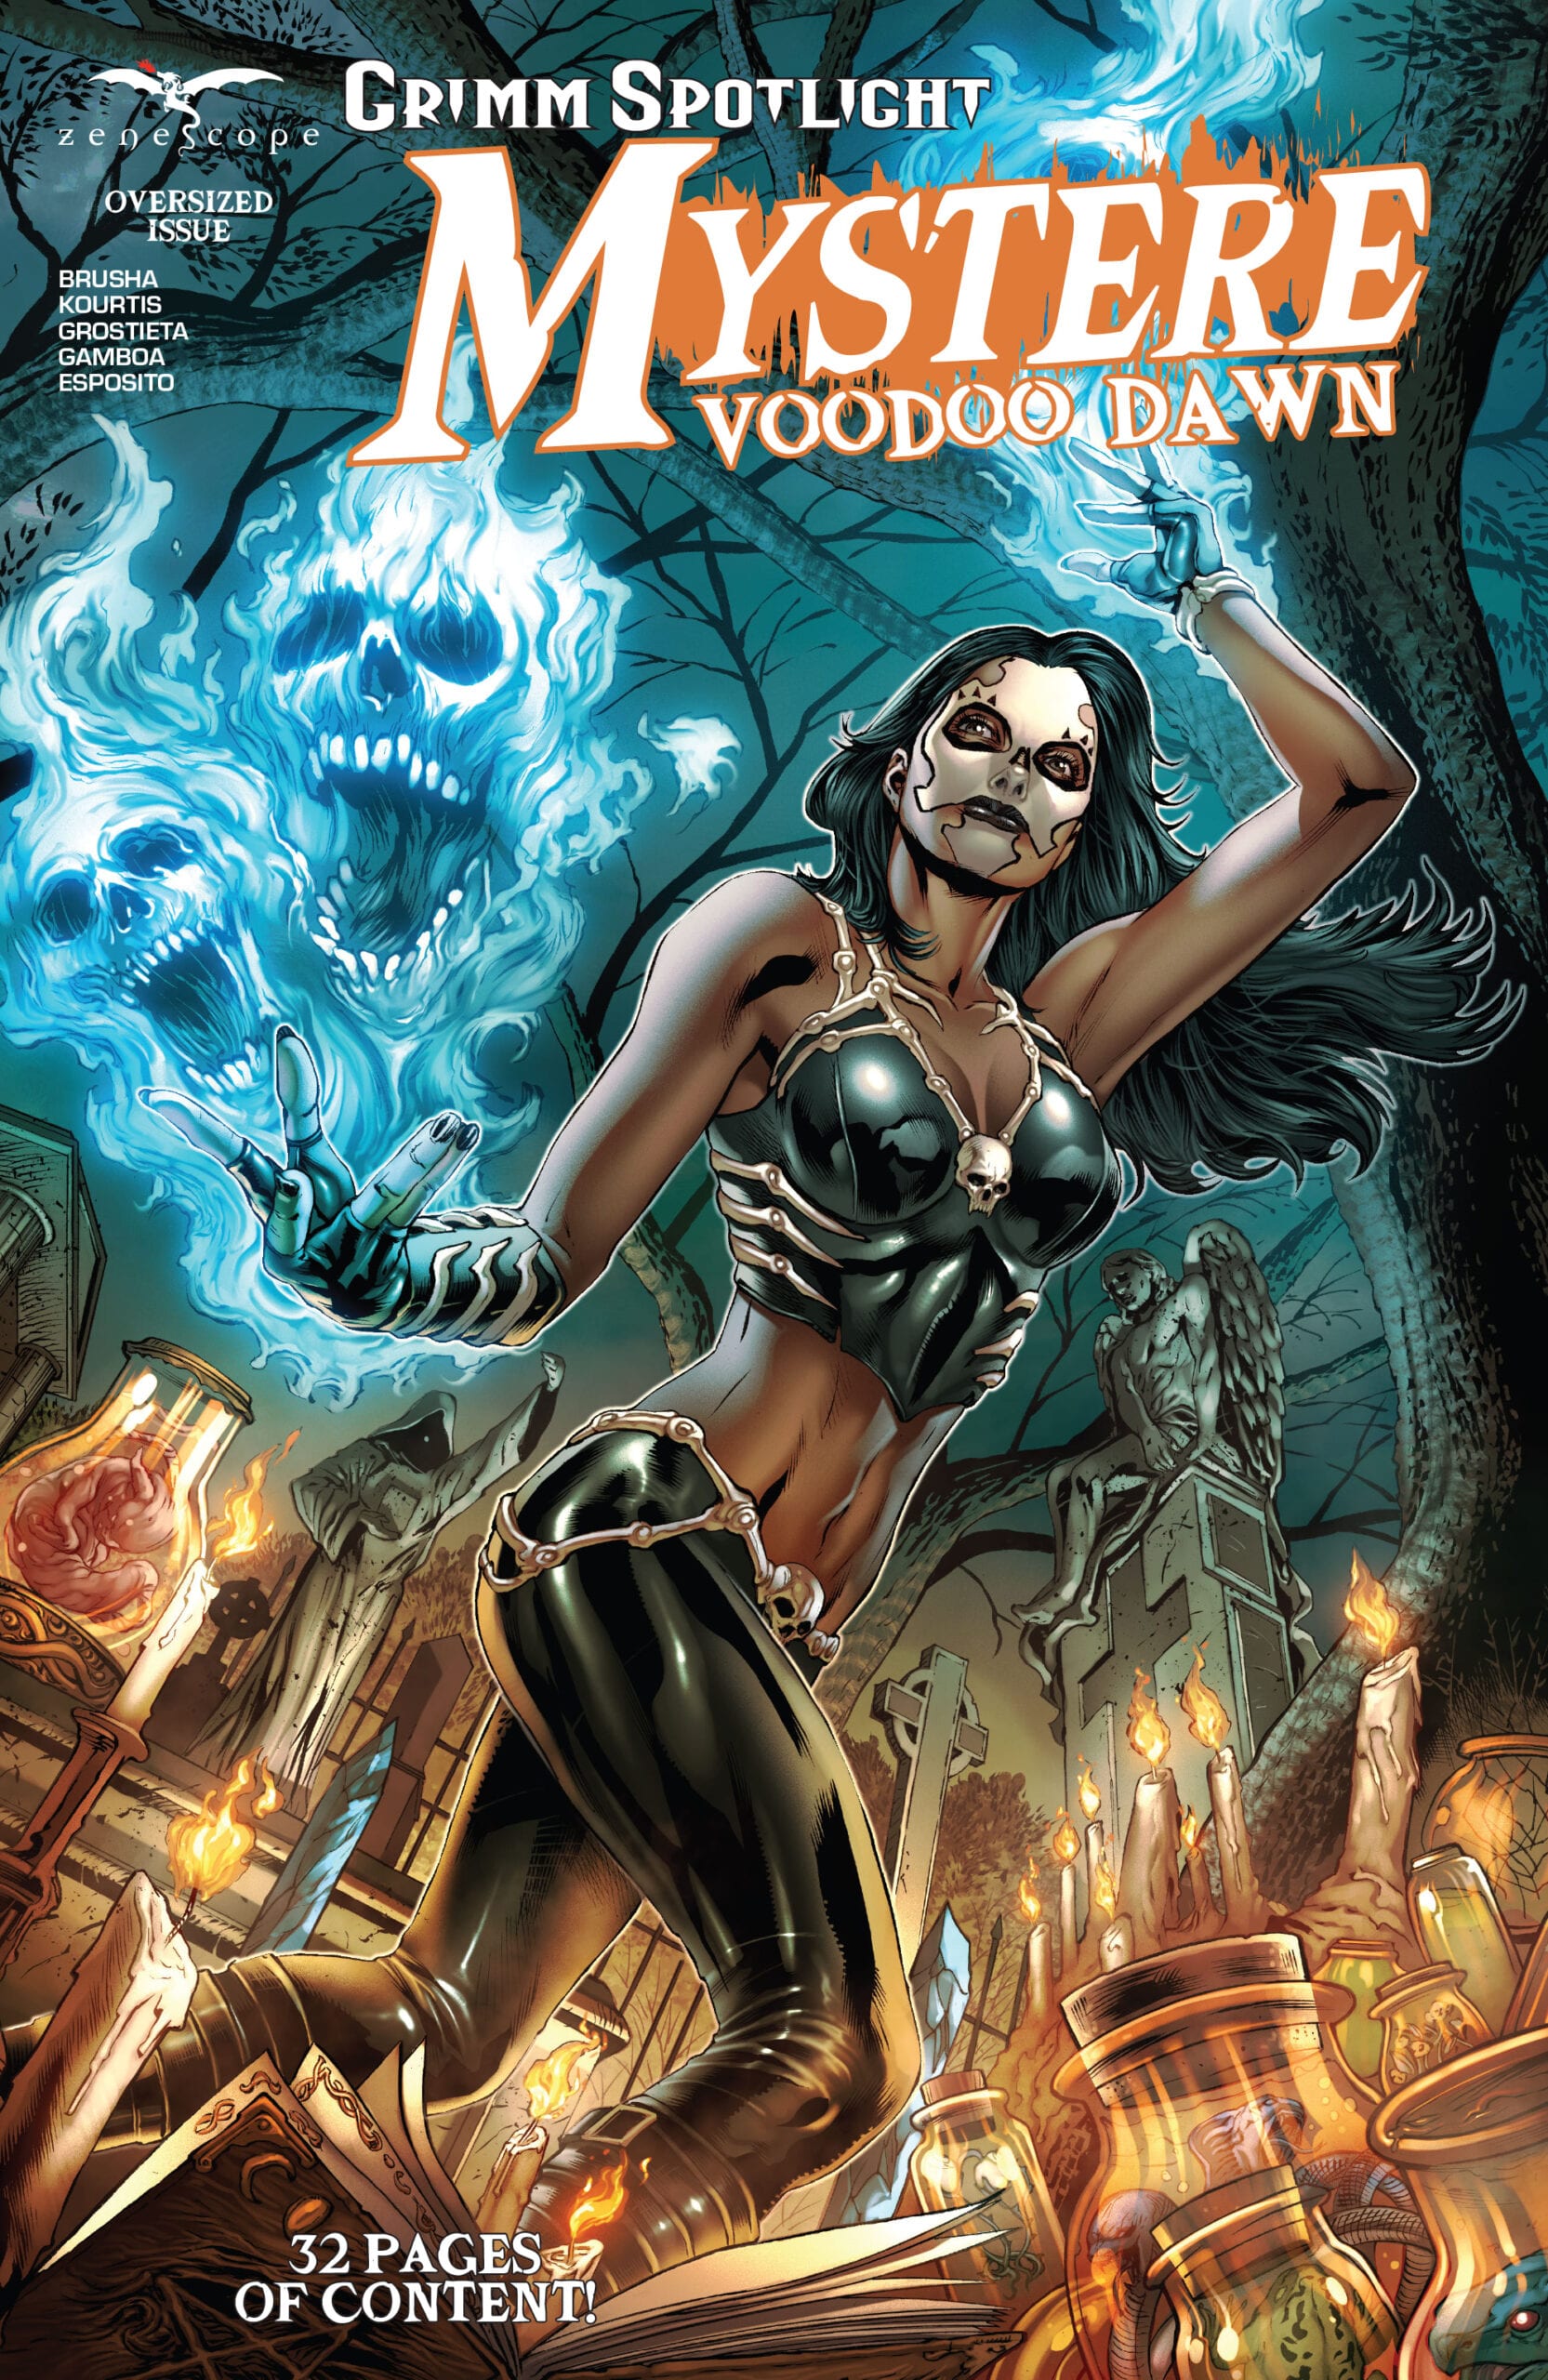 Comic completo Grimm Spotlight: Mystere Voodoo Dawn